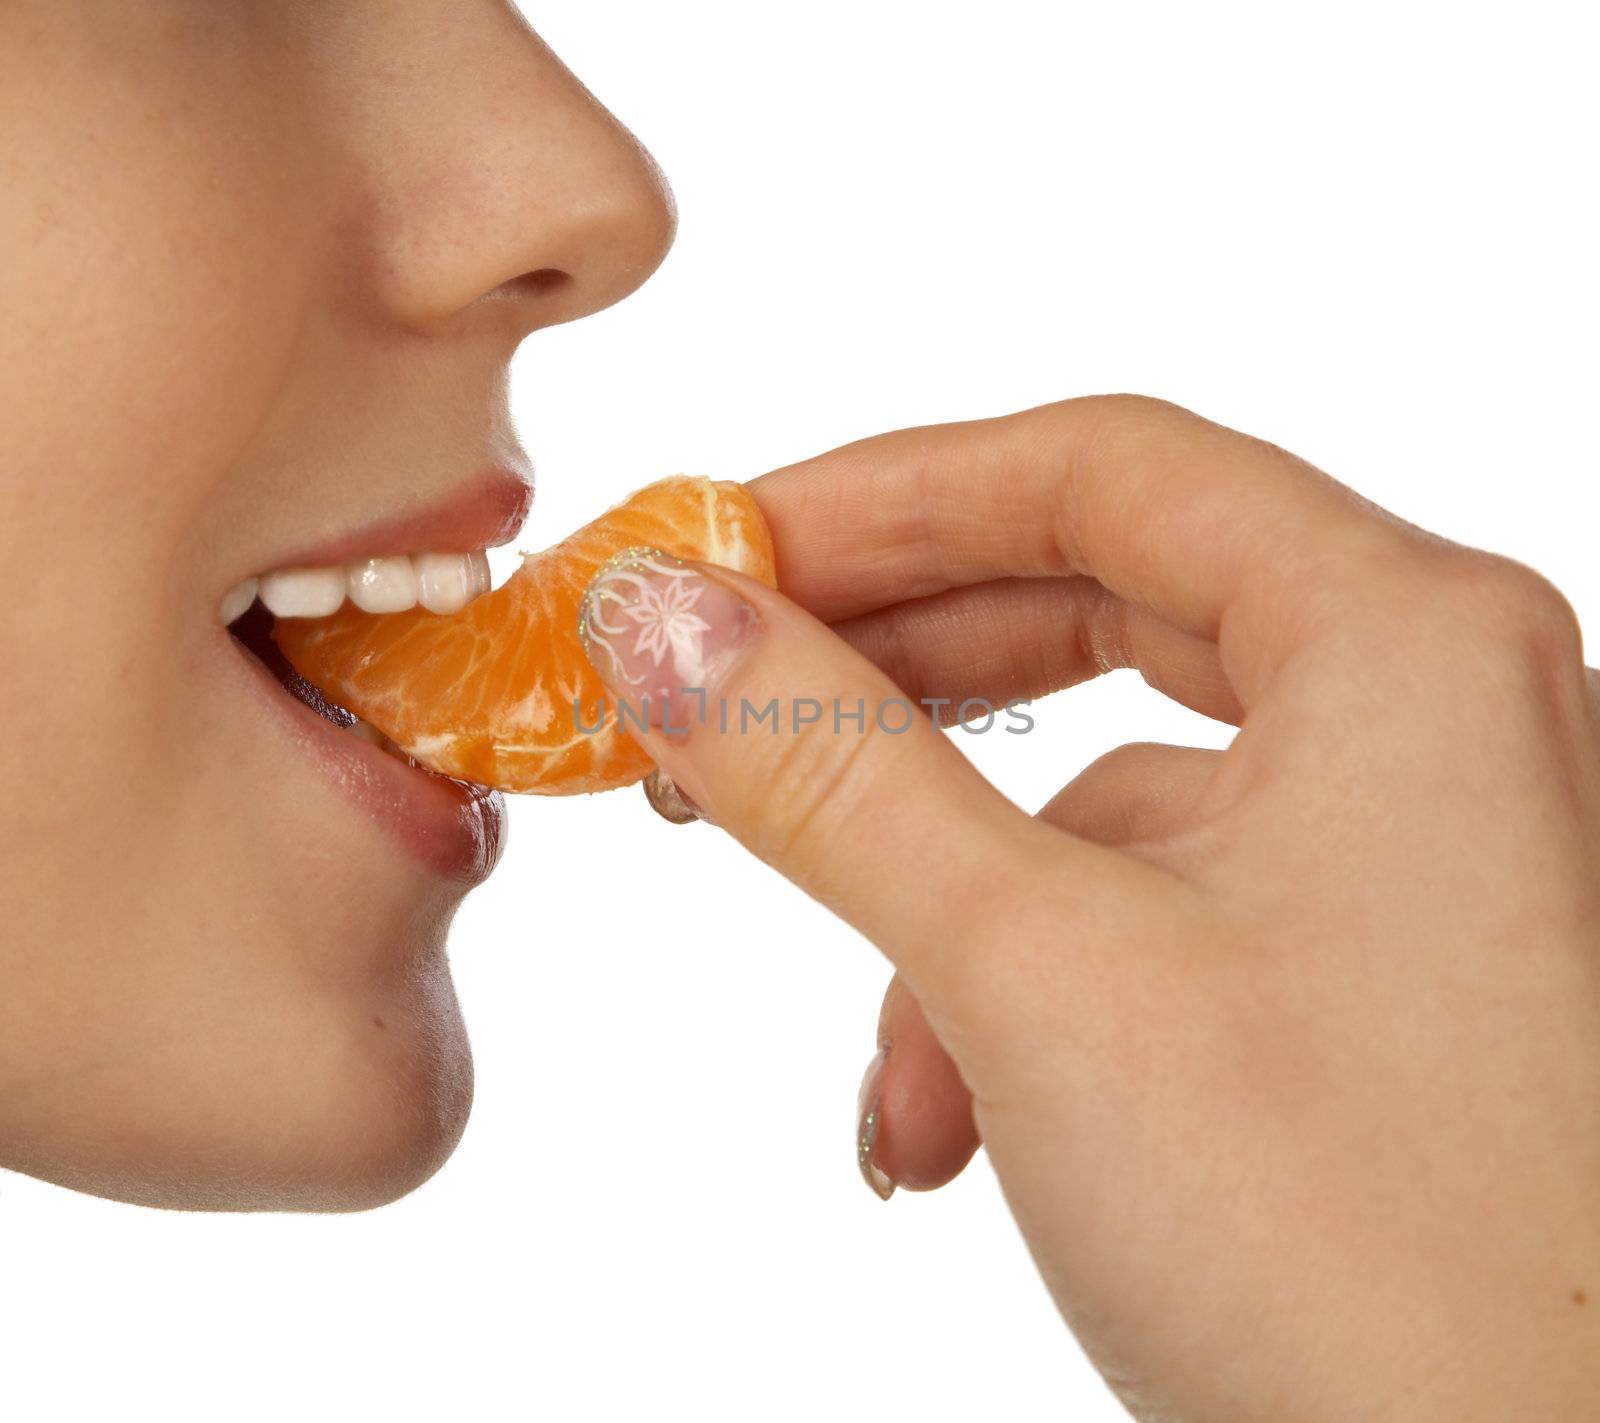 The girl biting a segment of  tangerine on white background